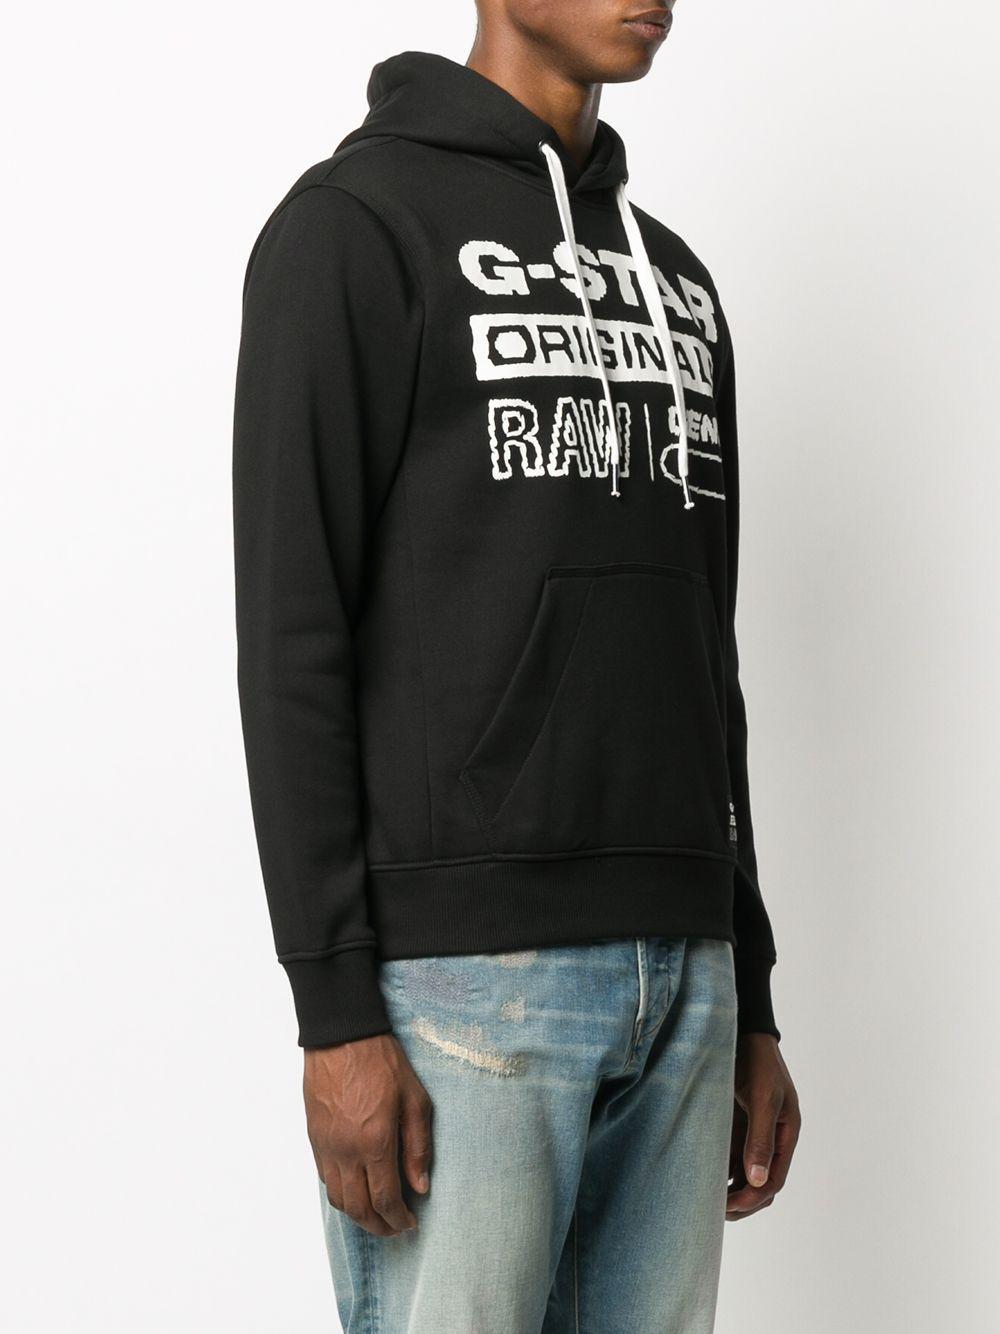 G-Star RAW Originals Logo Print Hoodie in Black for Men | Lyst